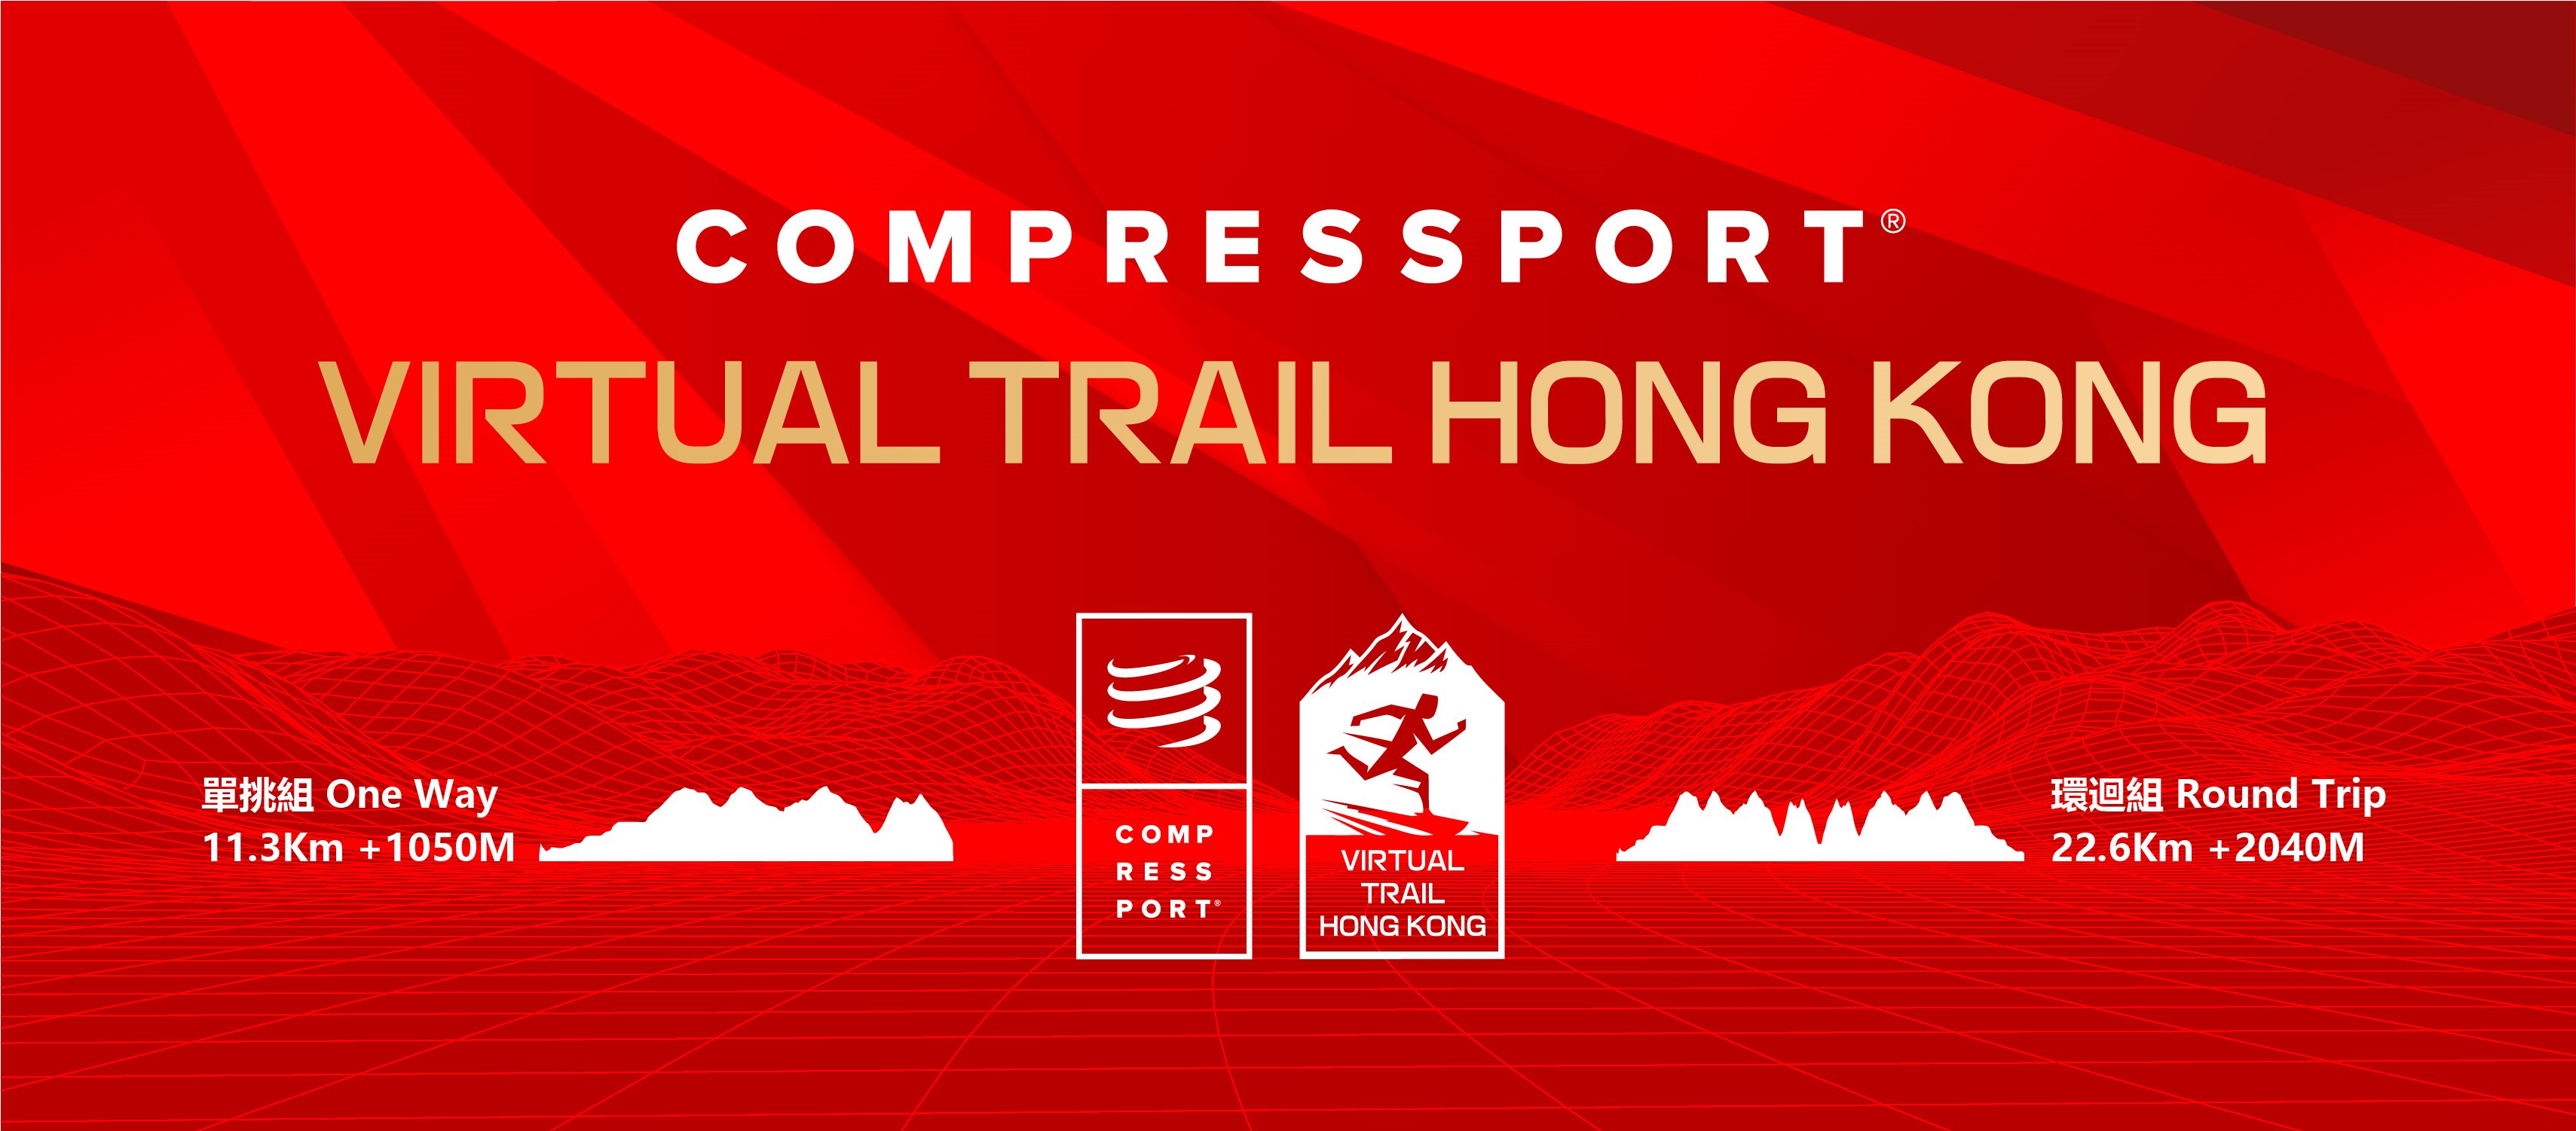 COMPRESSPORT Virtual Trail Hong Kong banner